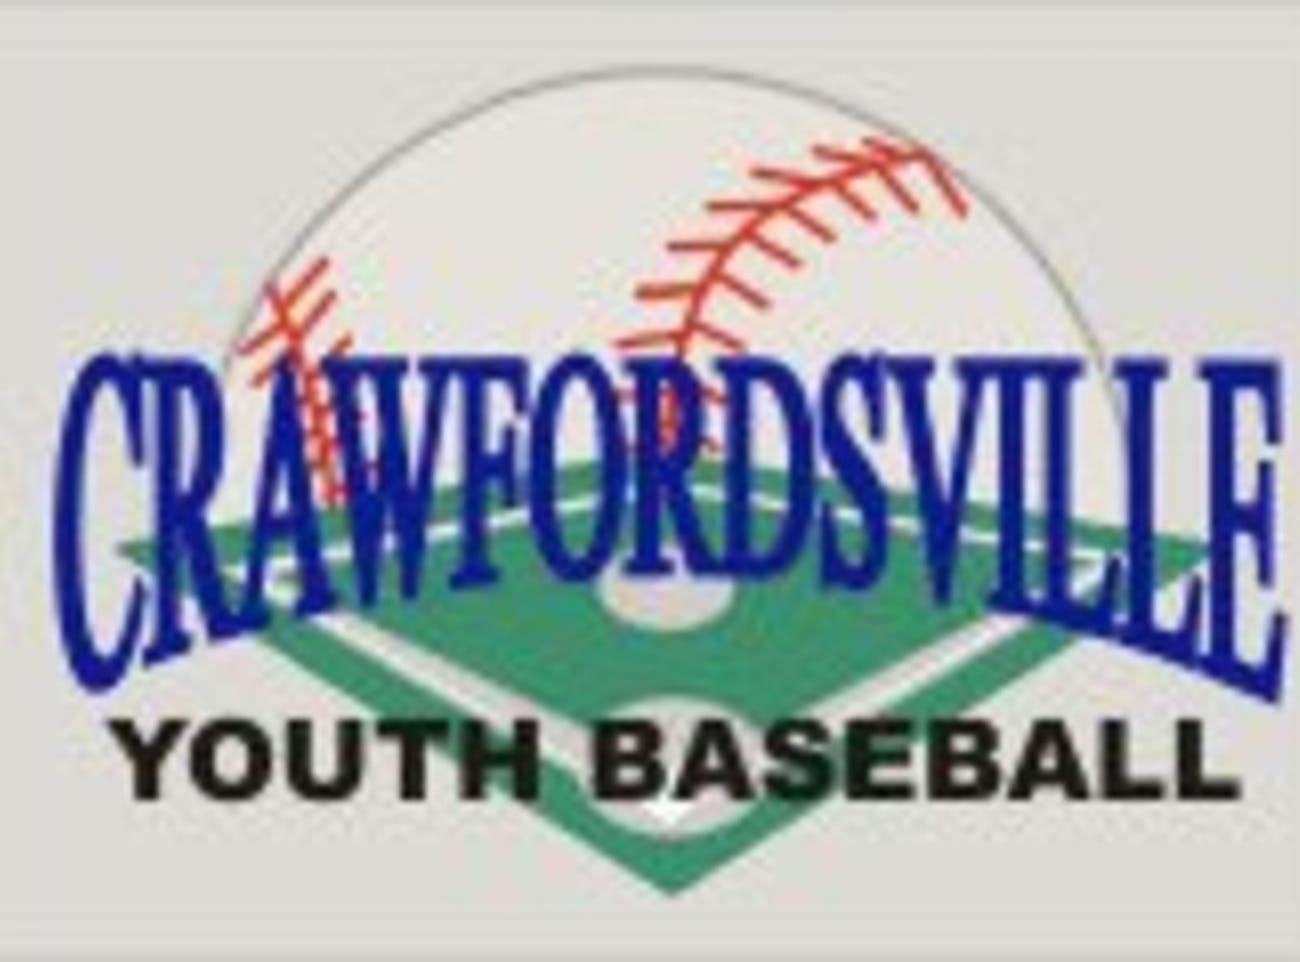 Crawfordsville Logo - Crawfordsville Youth Baseball. SCHWAN'S CARES™